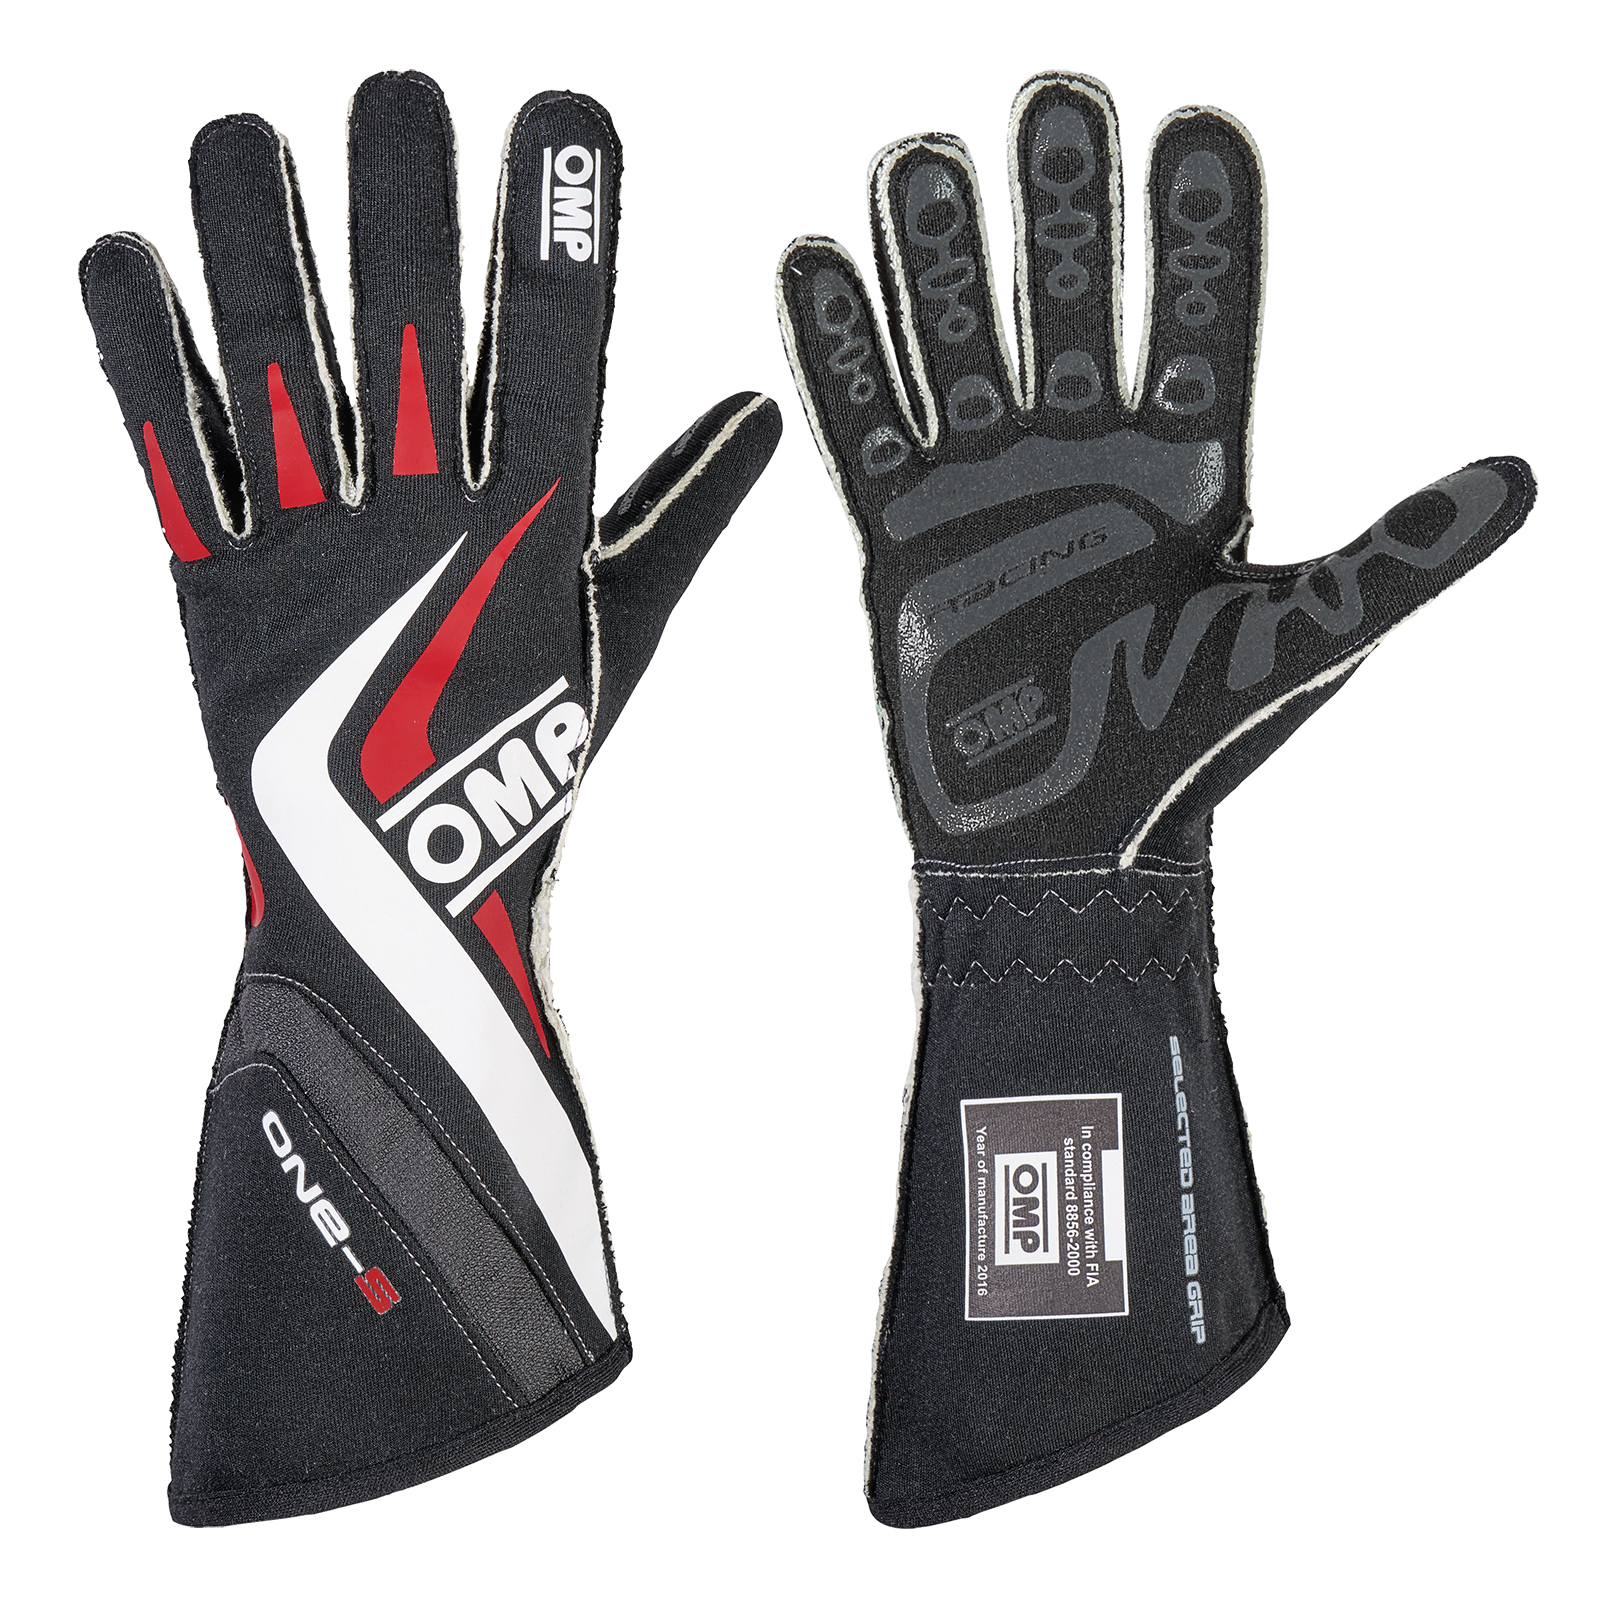 OMP One-S Race Gloves | OMP One-S Rally Gloves | OMP Race and Rally ...